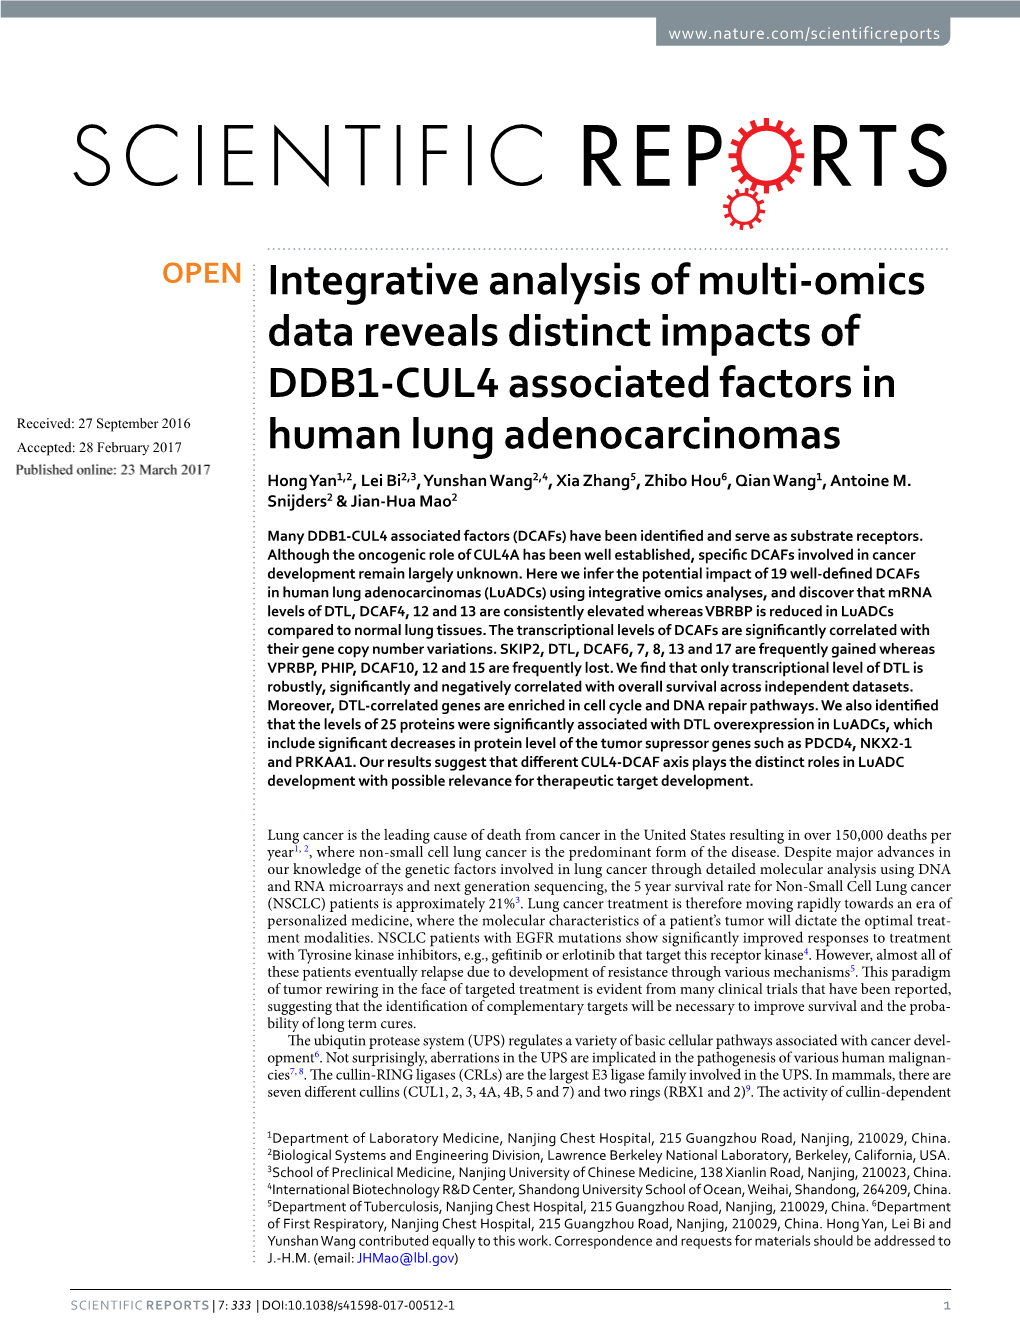 Integrative Analysis of Multi-Omics Data Reveals Distinct Impacts Of